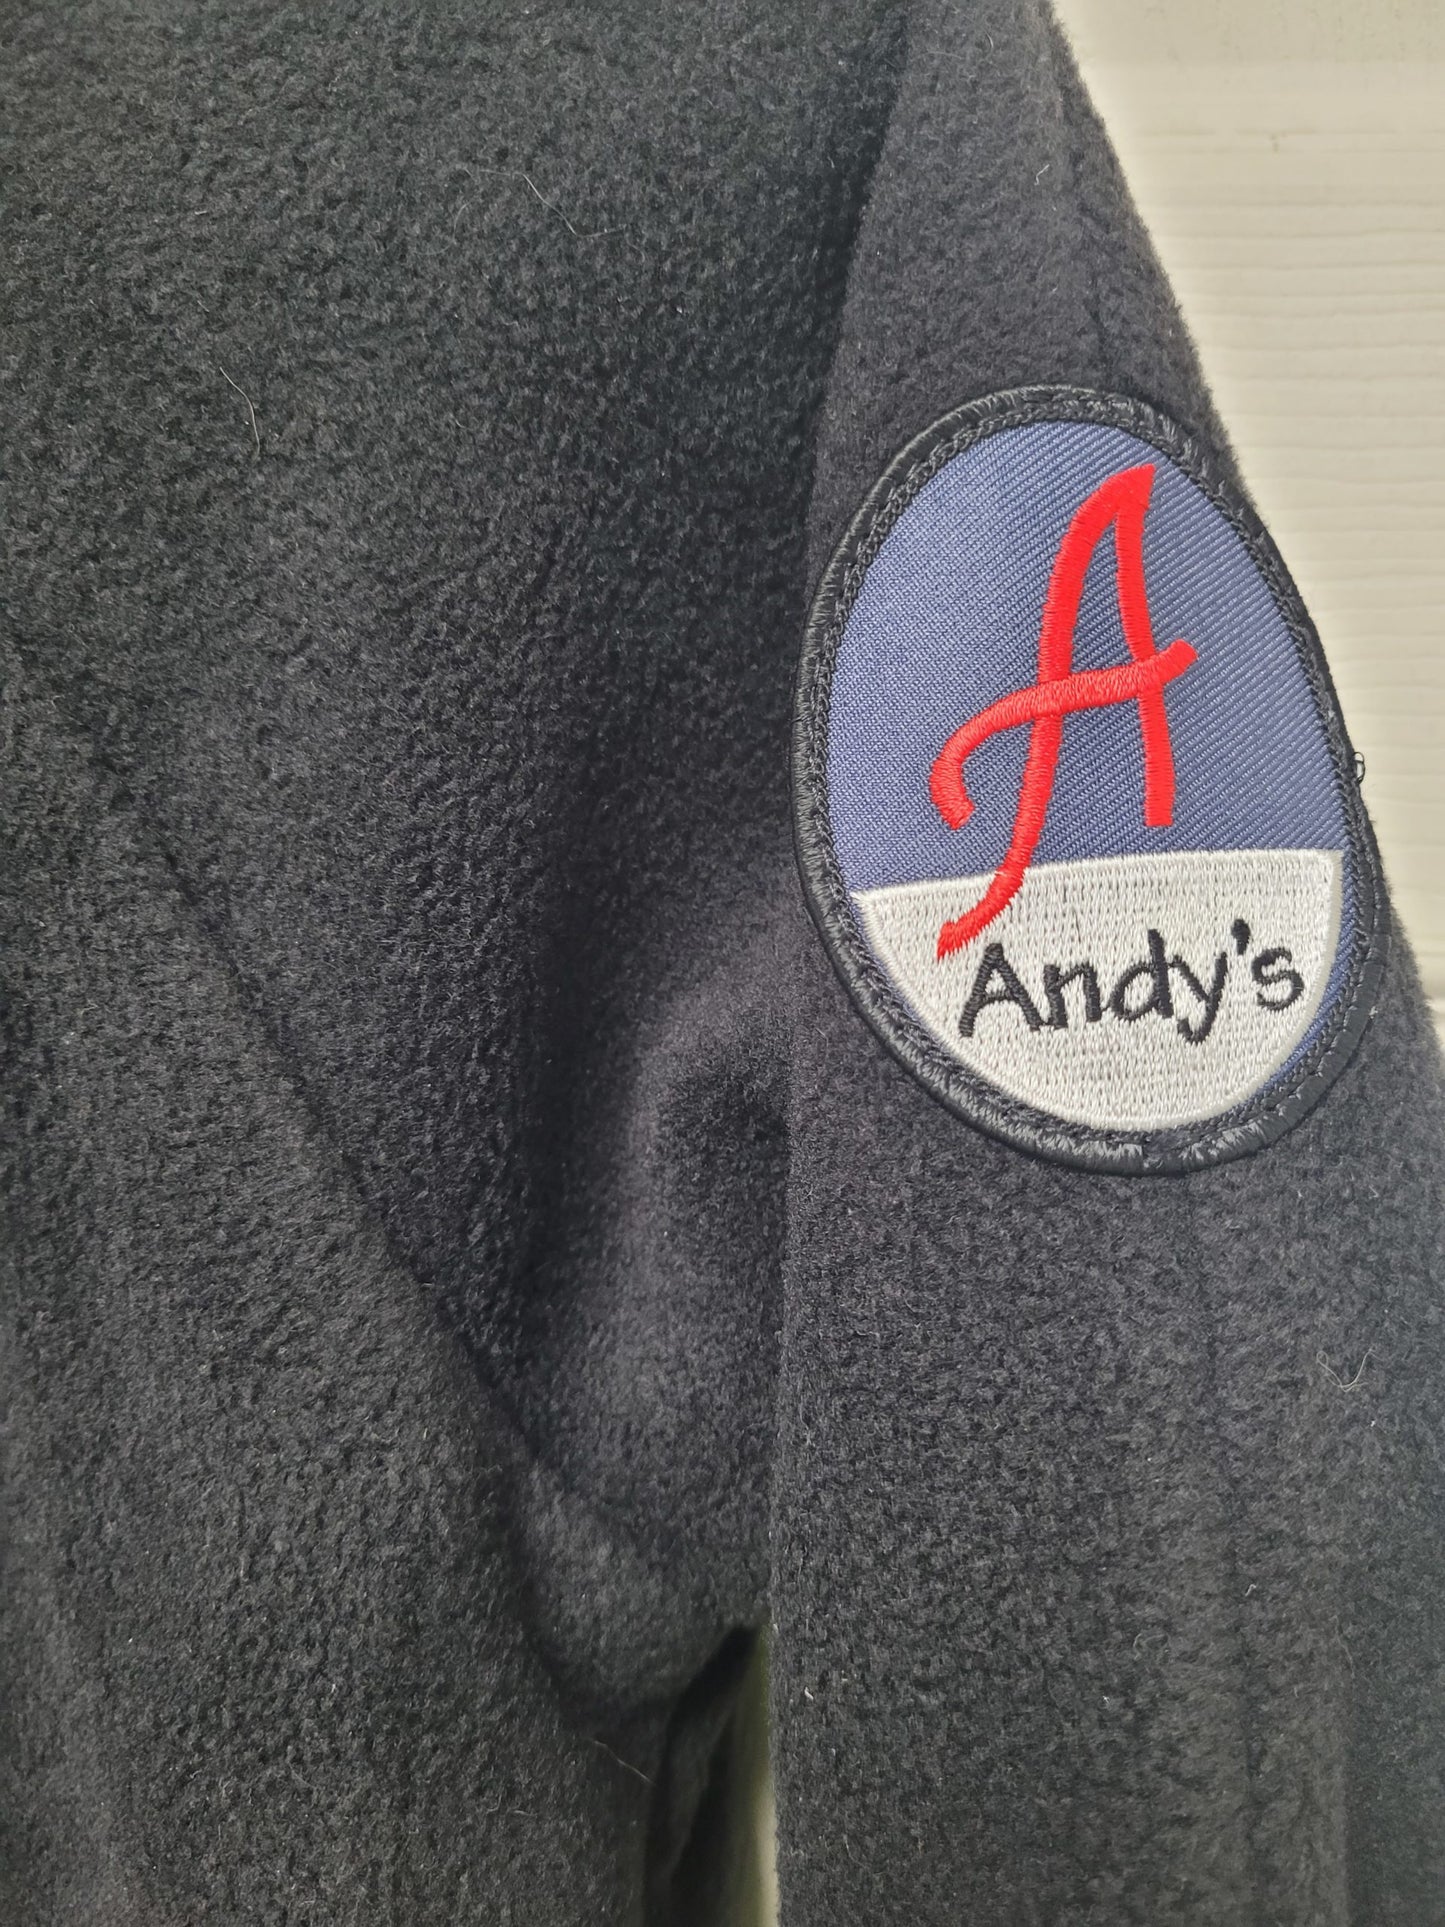 Andy's Thermal Drysuit Undergarment Ladies